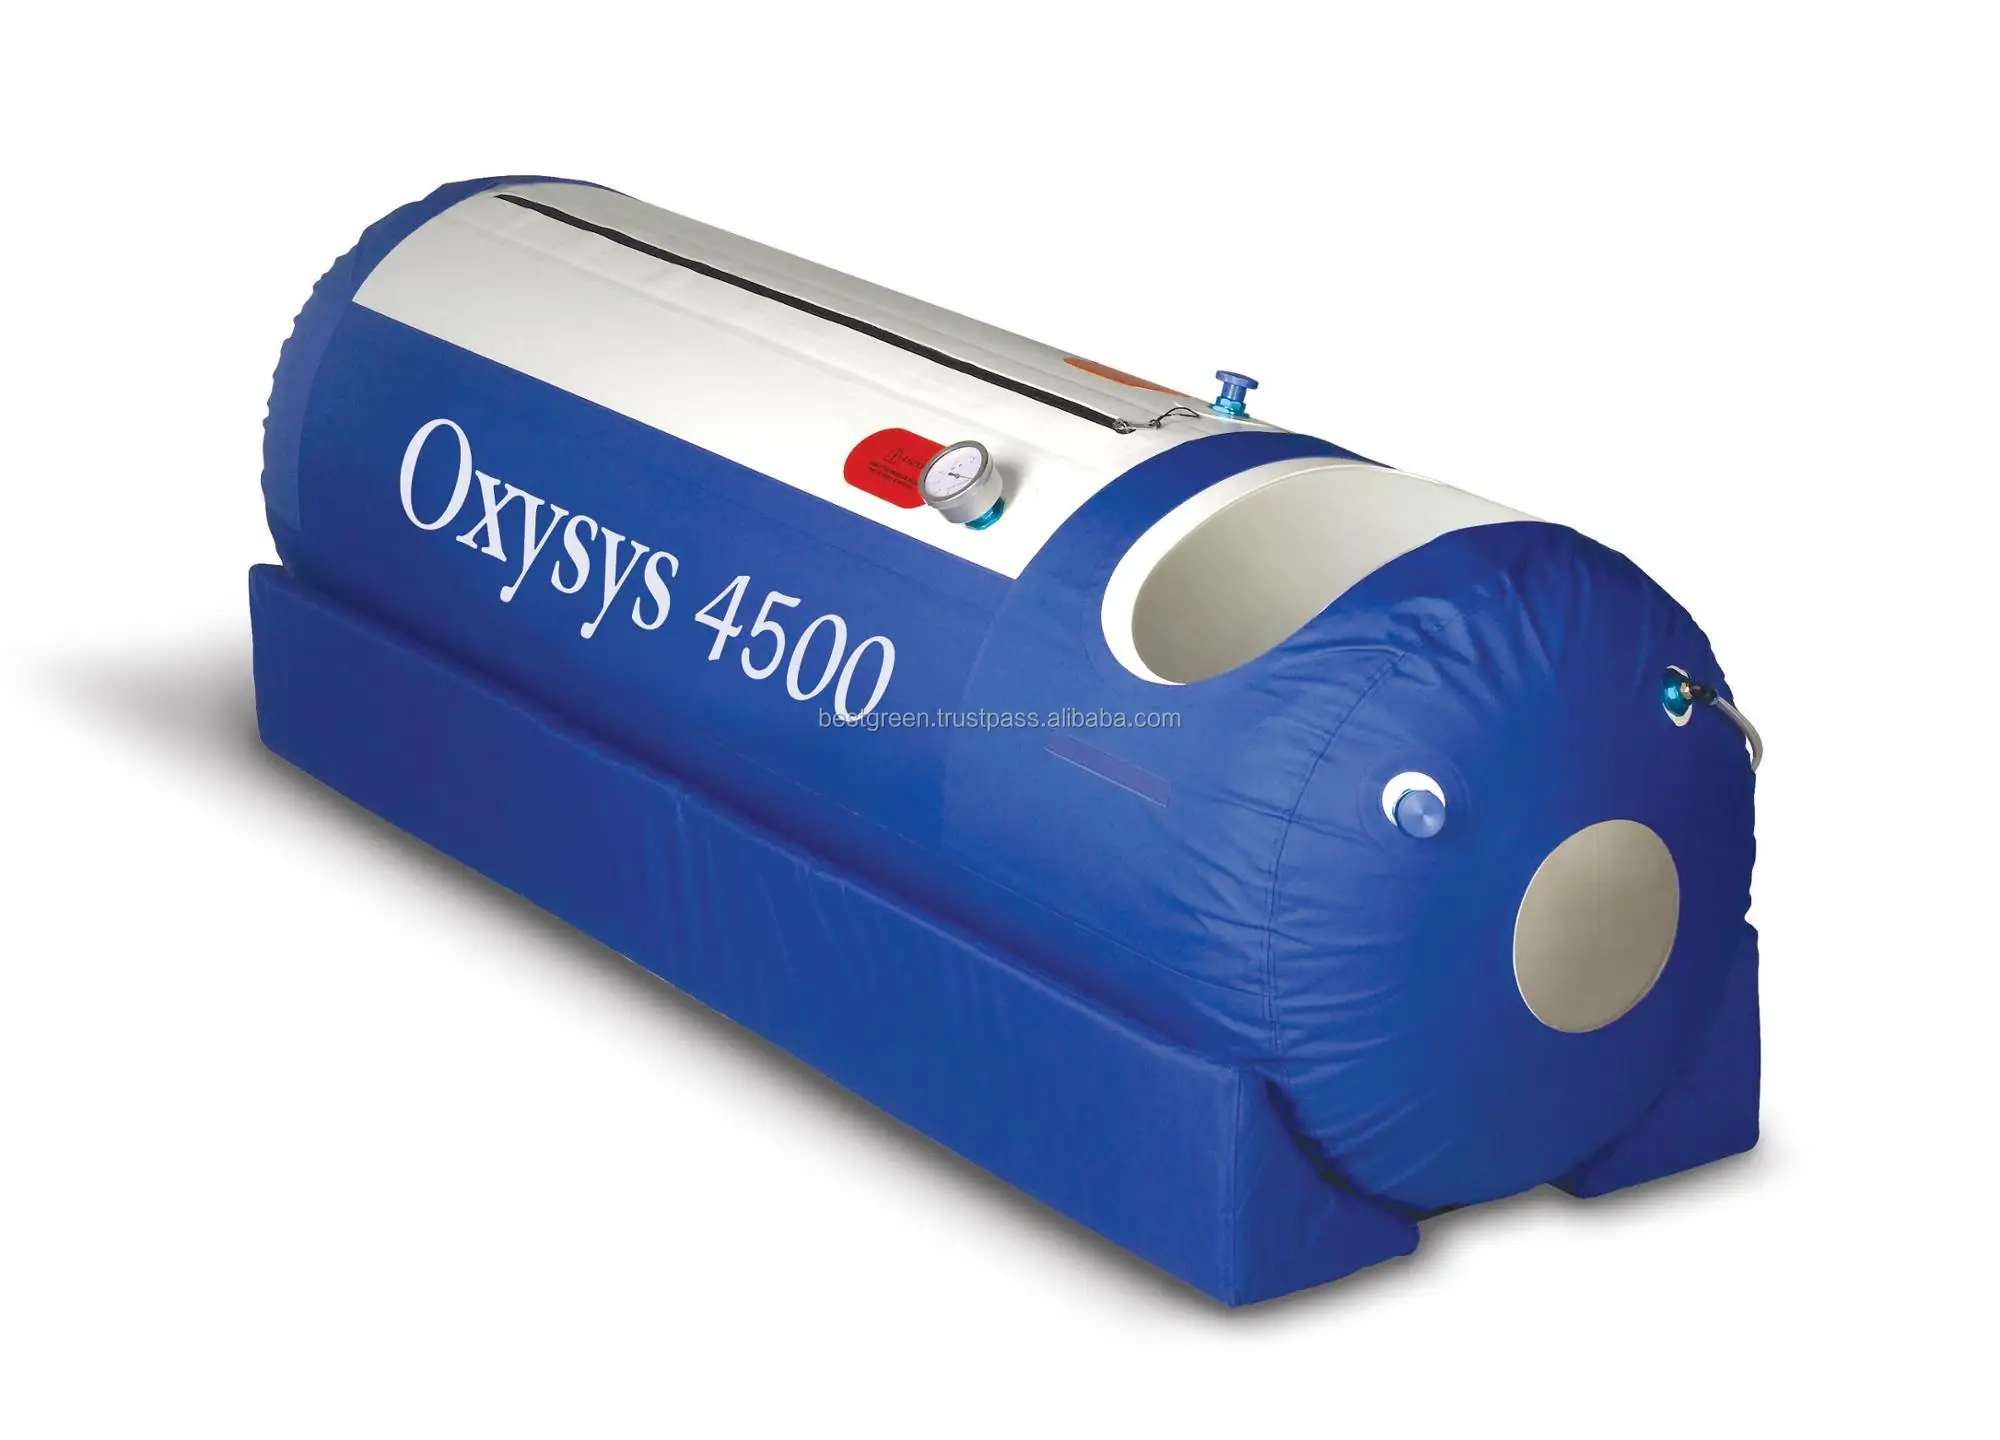 Барокамера какой кислород. Барокамера Oxysys 4500. Кислородная капсула Oxysys 4500. Гипербарическая барокамера. Кислородная камера o2one - h810.